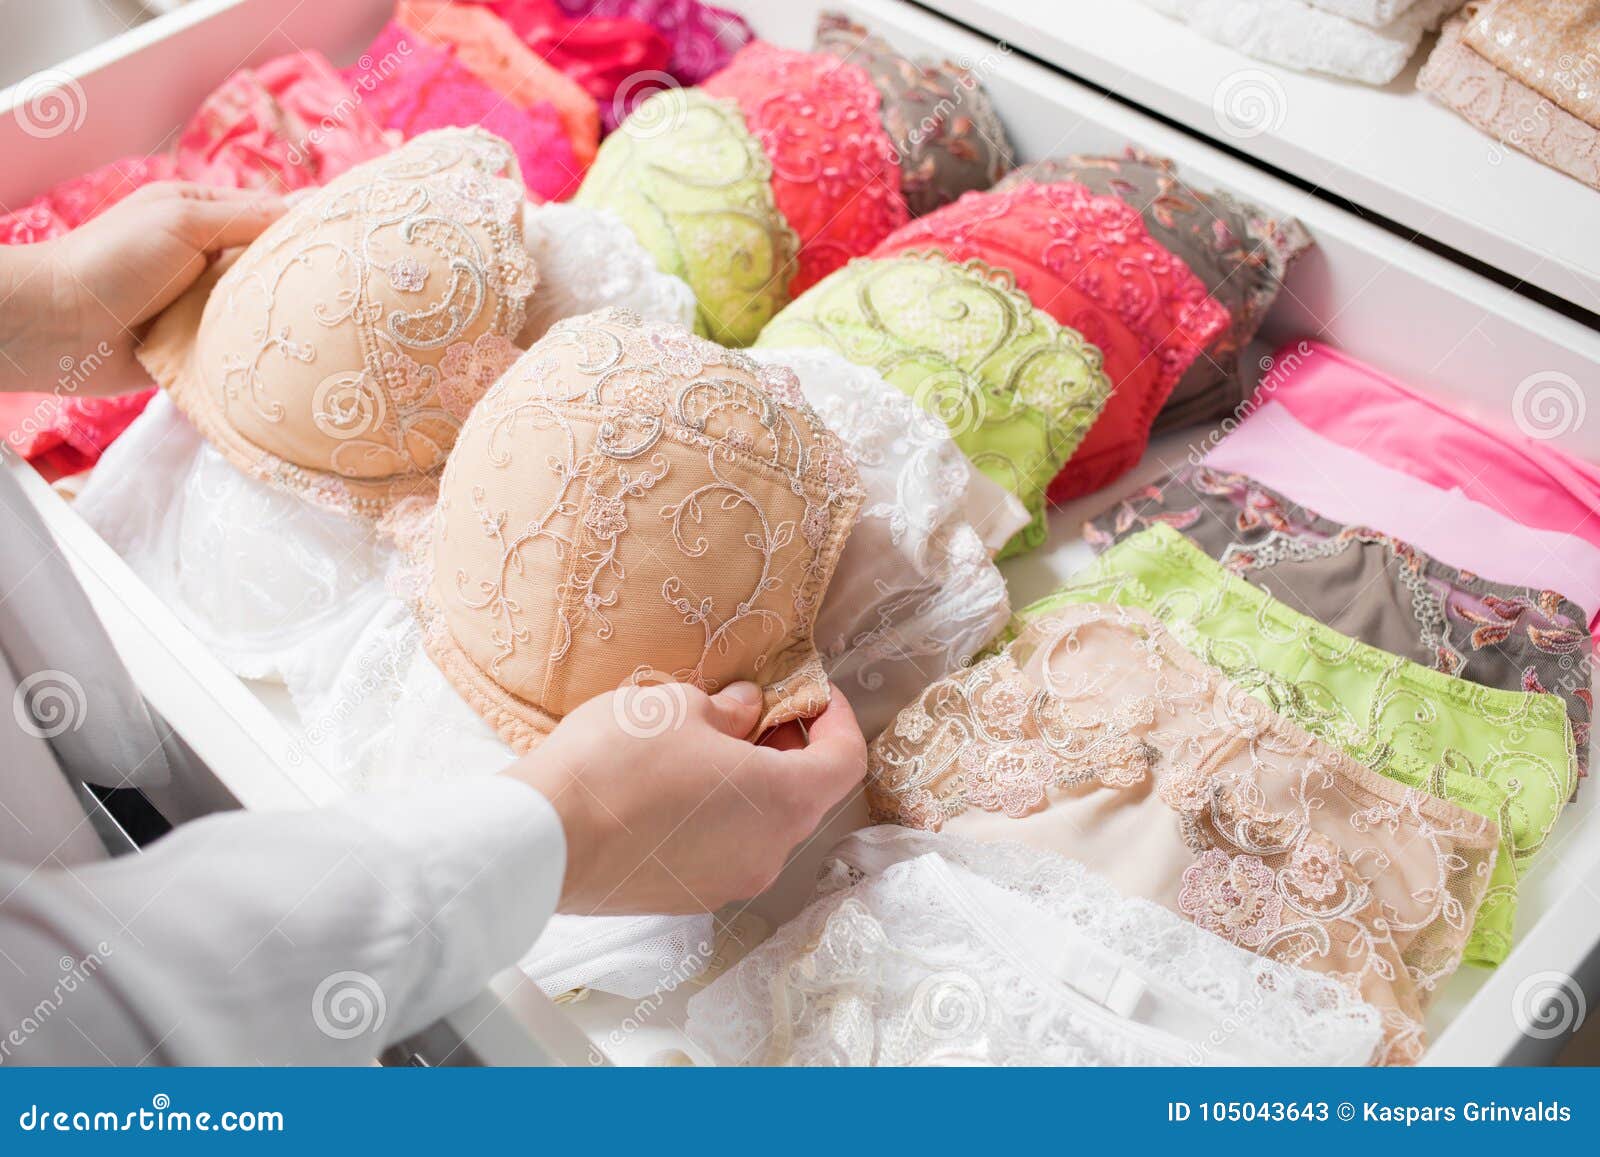 woman organizing underwear in drawer